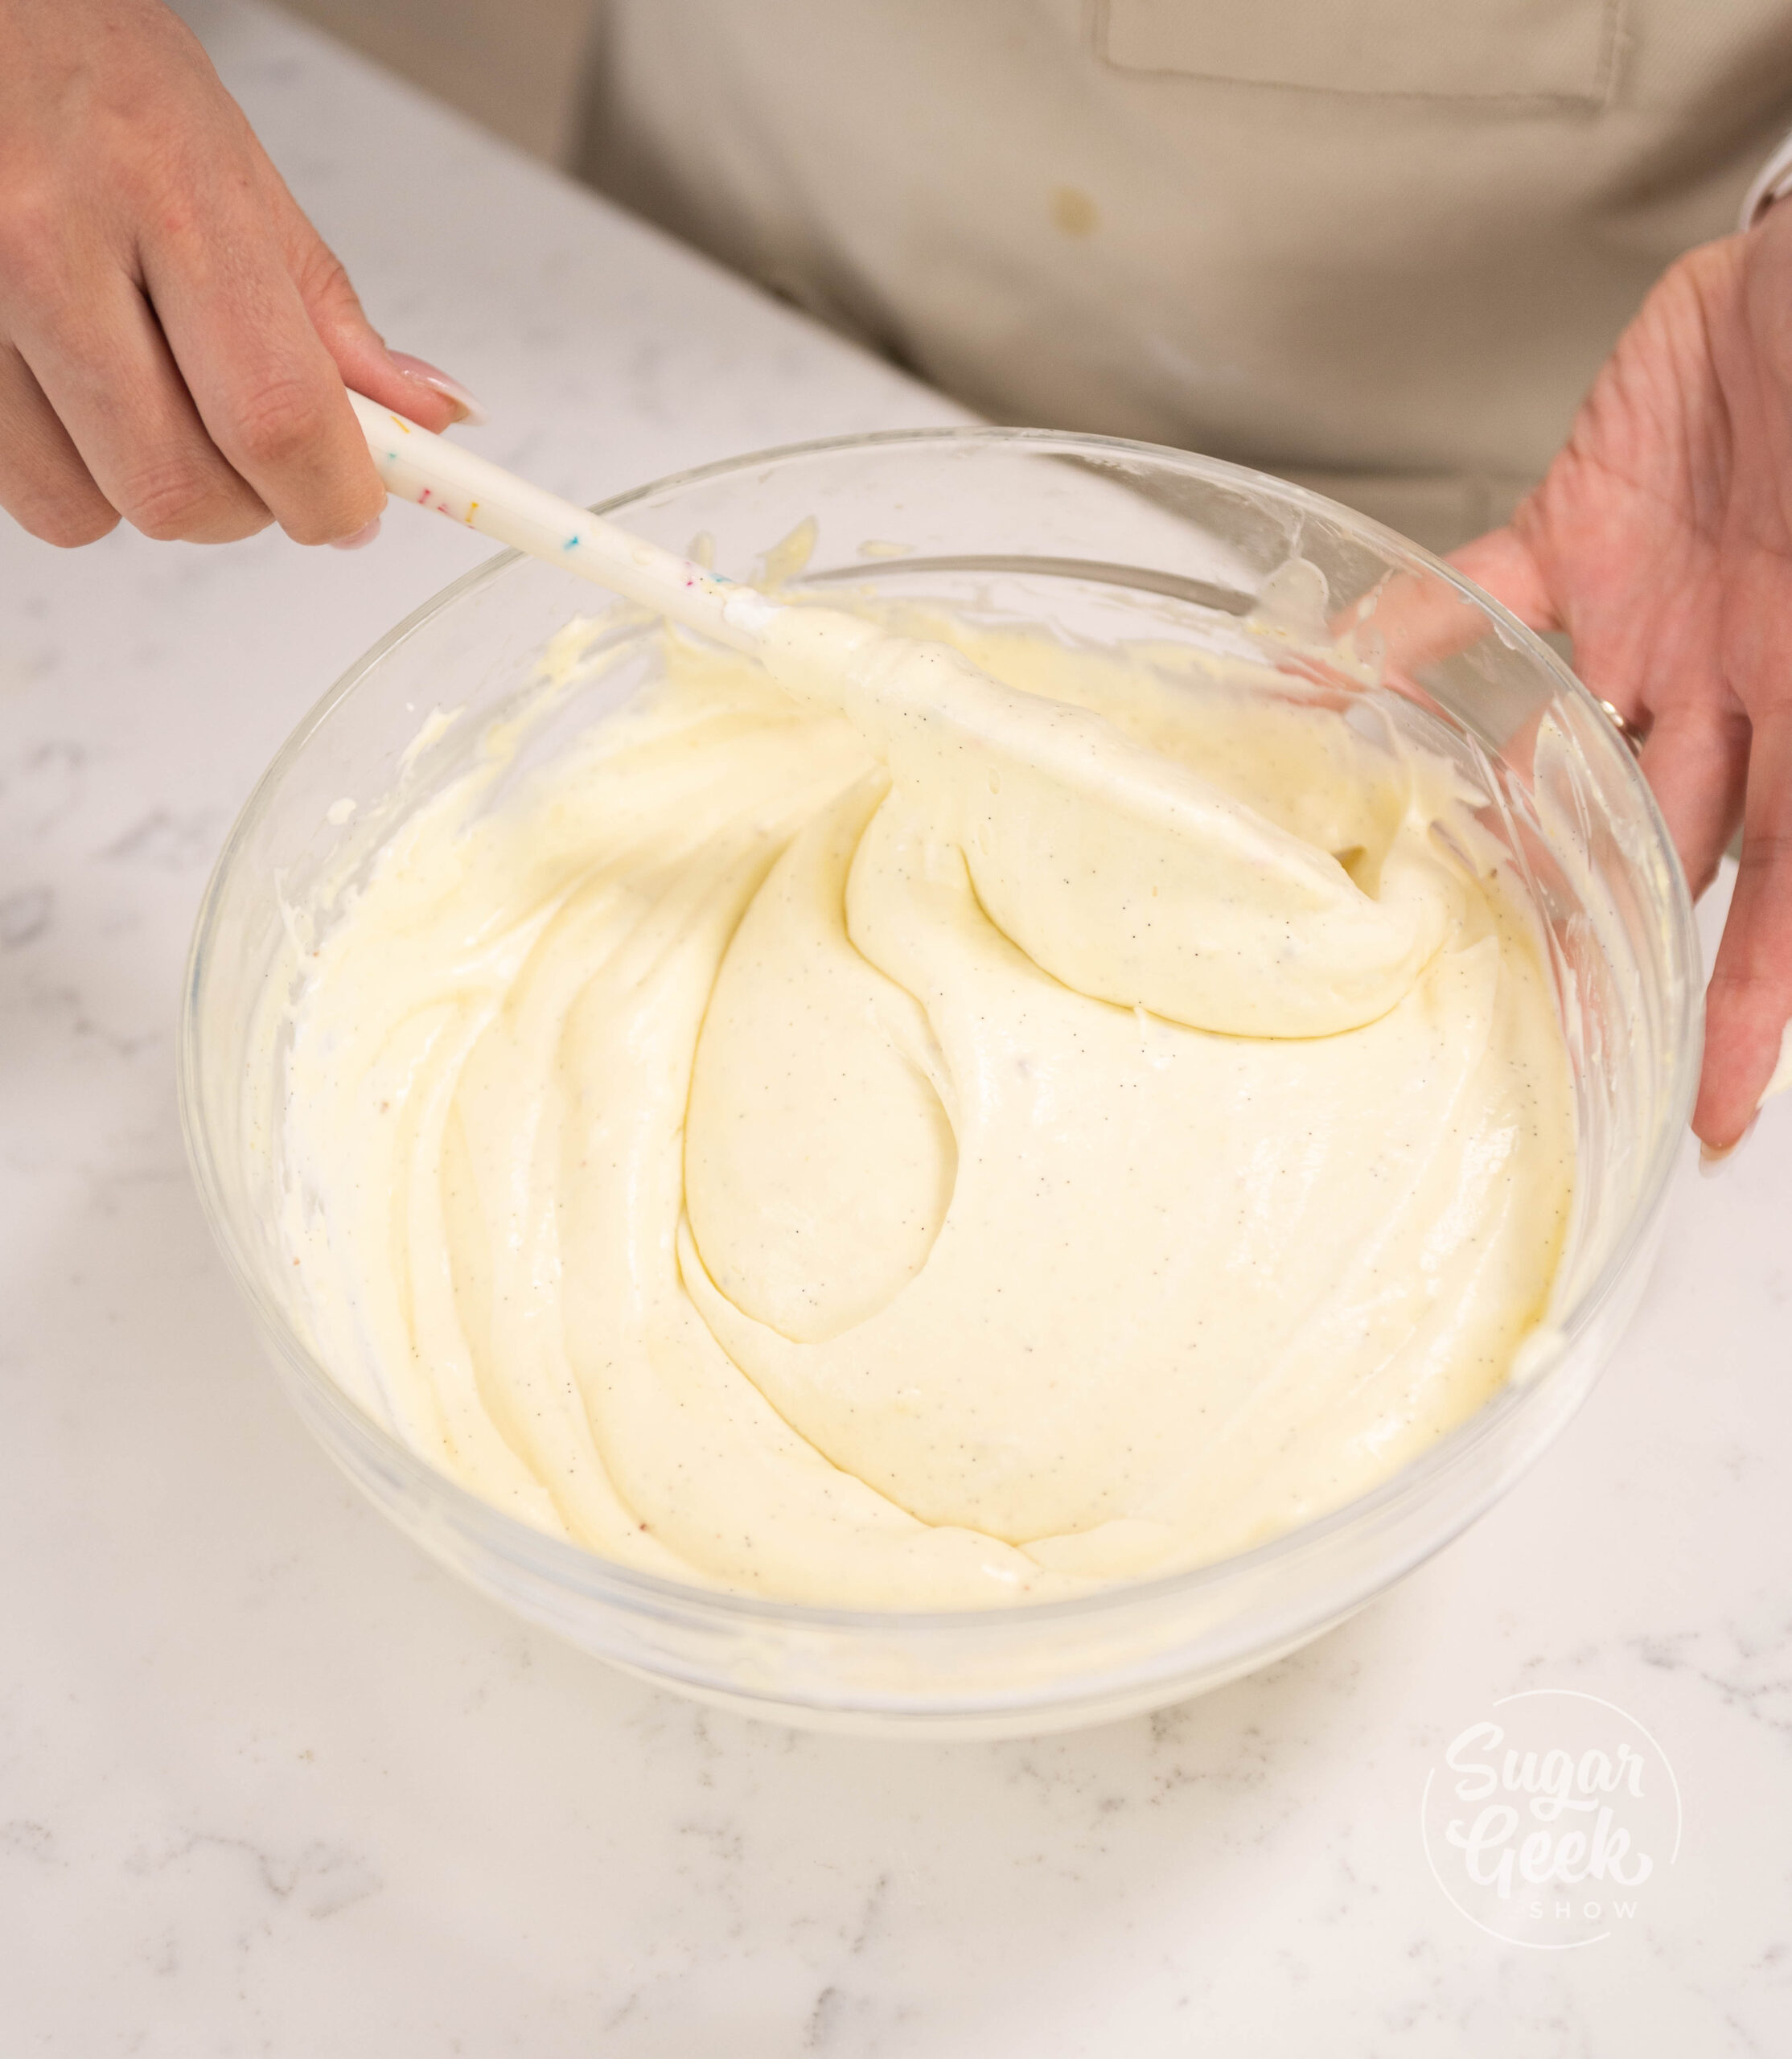 hand holding spatula mixing bowl of bavarian cream